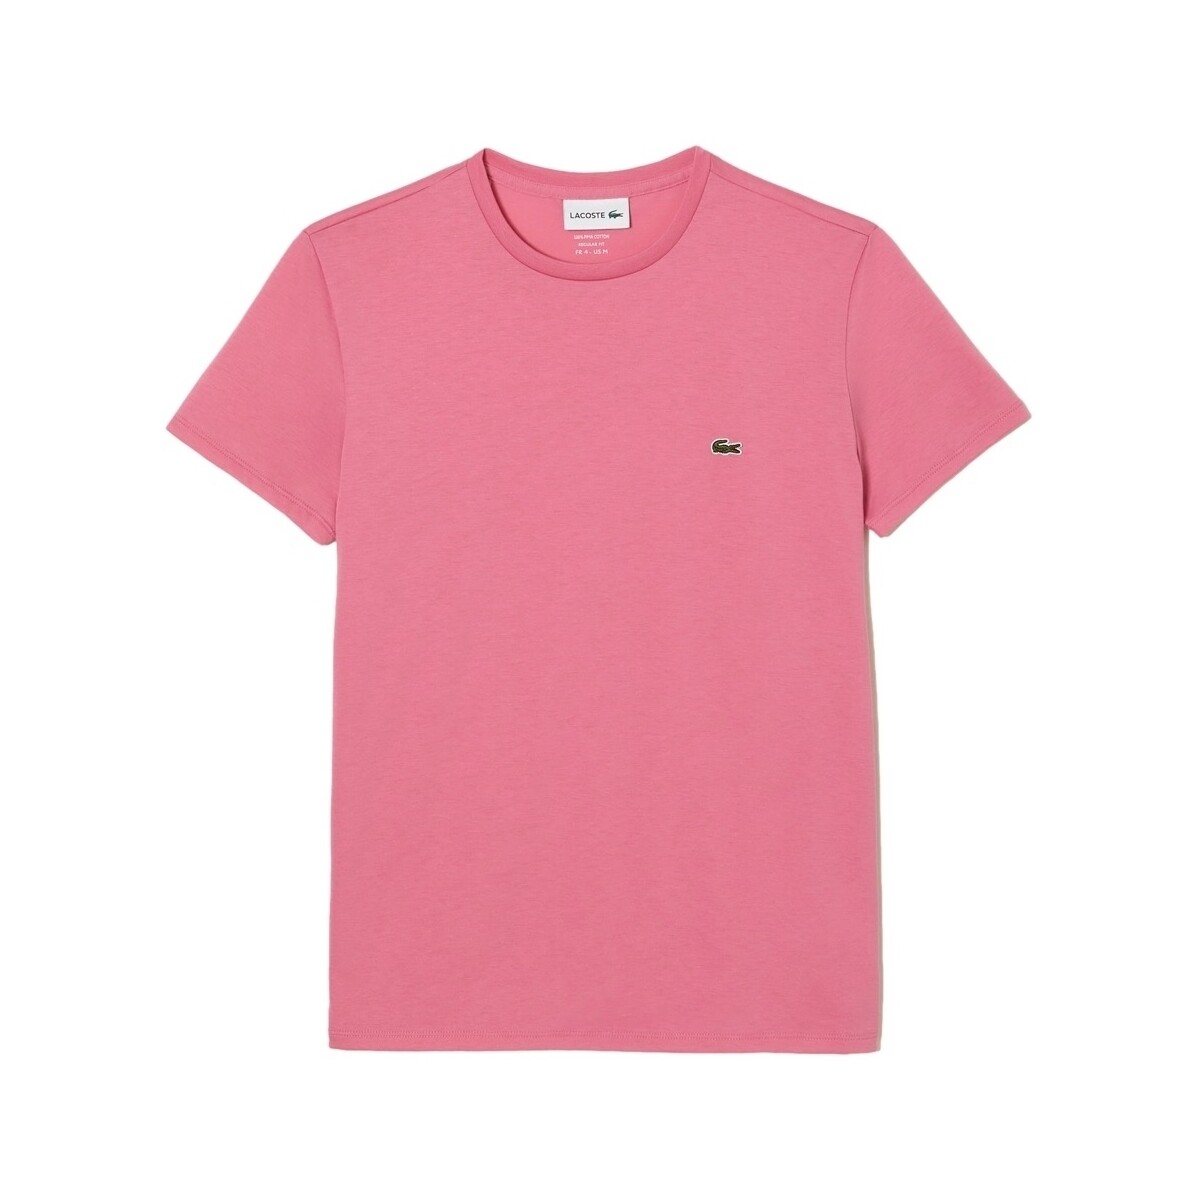 textil Herre T-shirts & poloer Lacoste Pima Cotton T-Shirt - Rose Pink